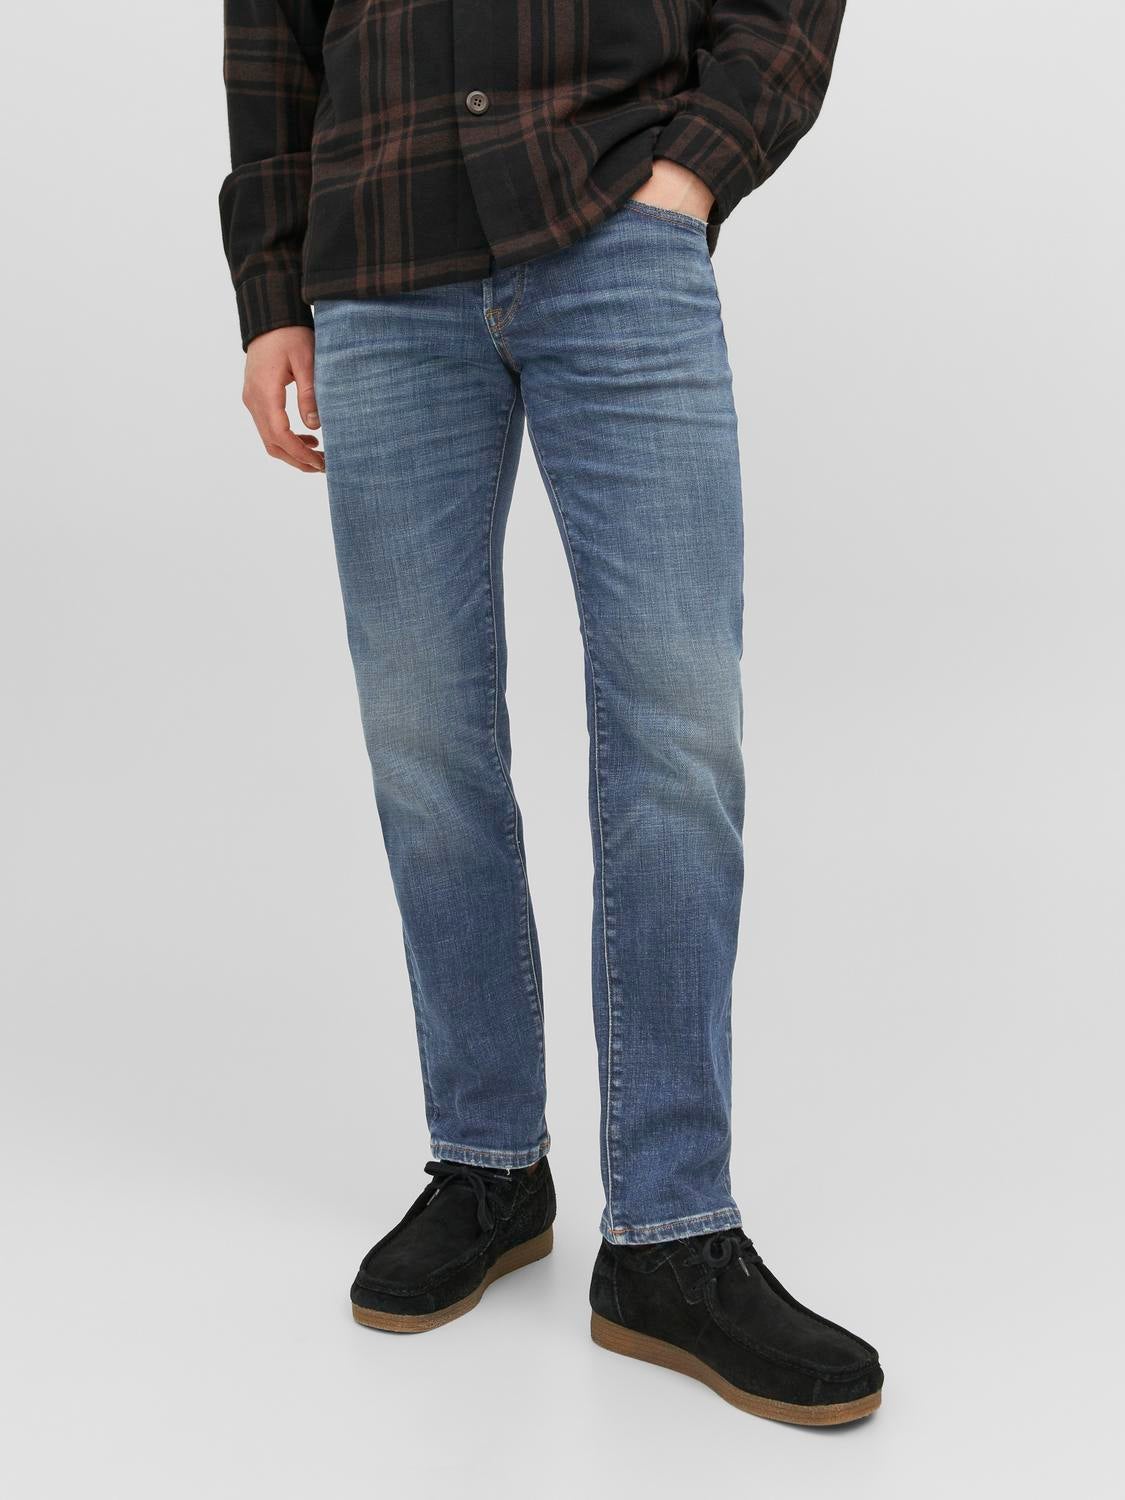 Britta Denim Jean - Premium Slim-Fit Jeans